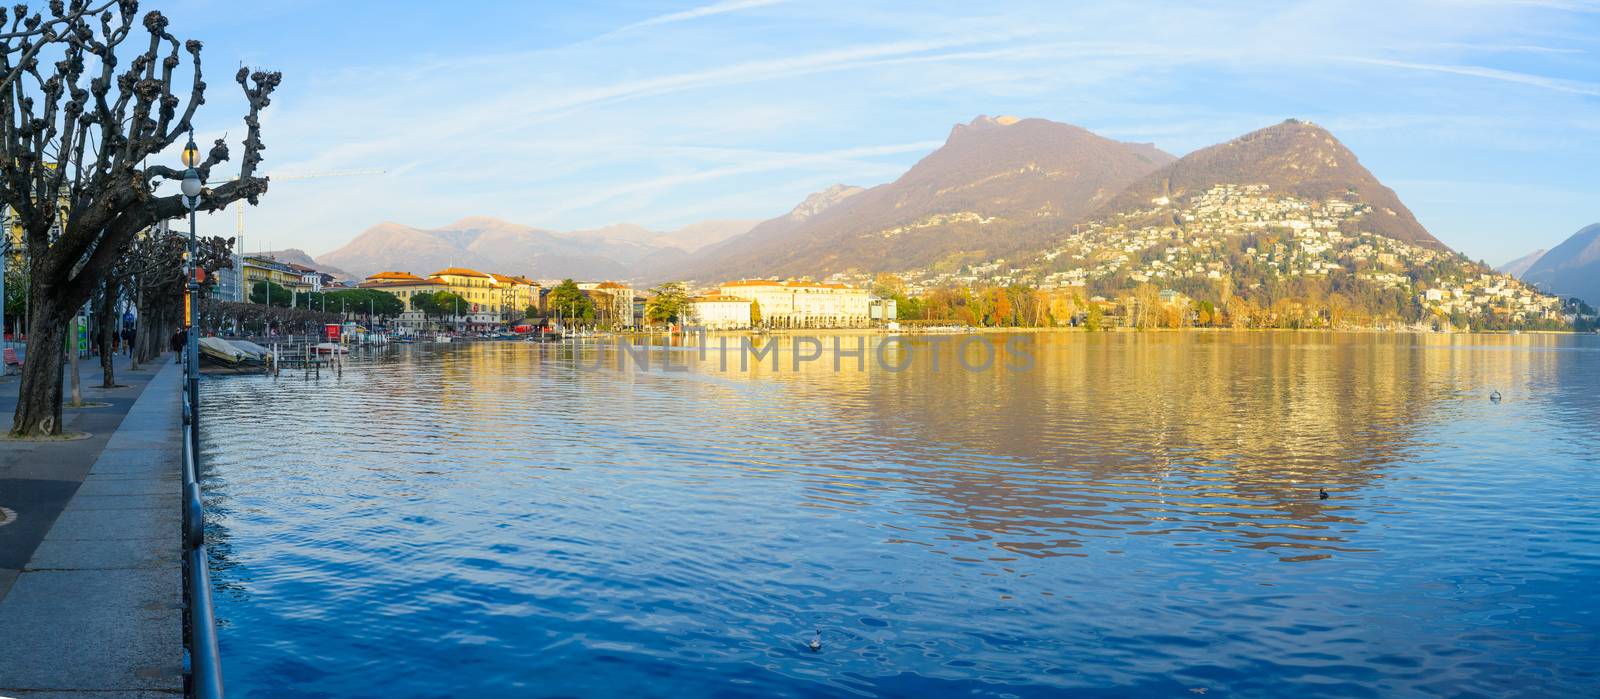 LUGANO, SWITZERLAND - DECEMBER 29, 2015: Panoramic view of the lakeside promenade, with locals and visitors, in Lugano, Ticino, Switzerland